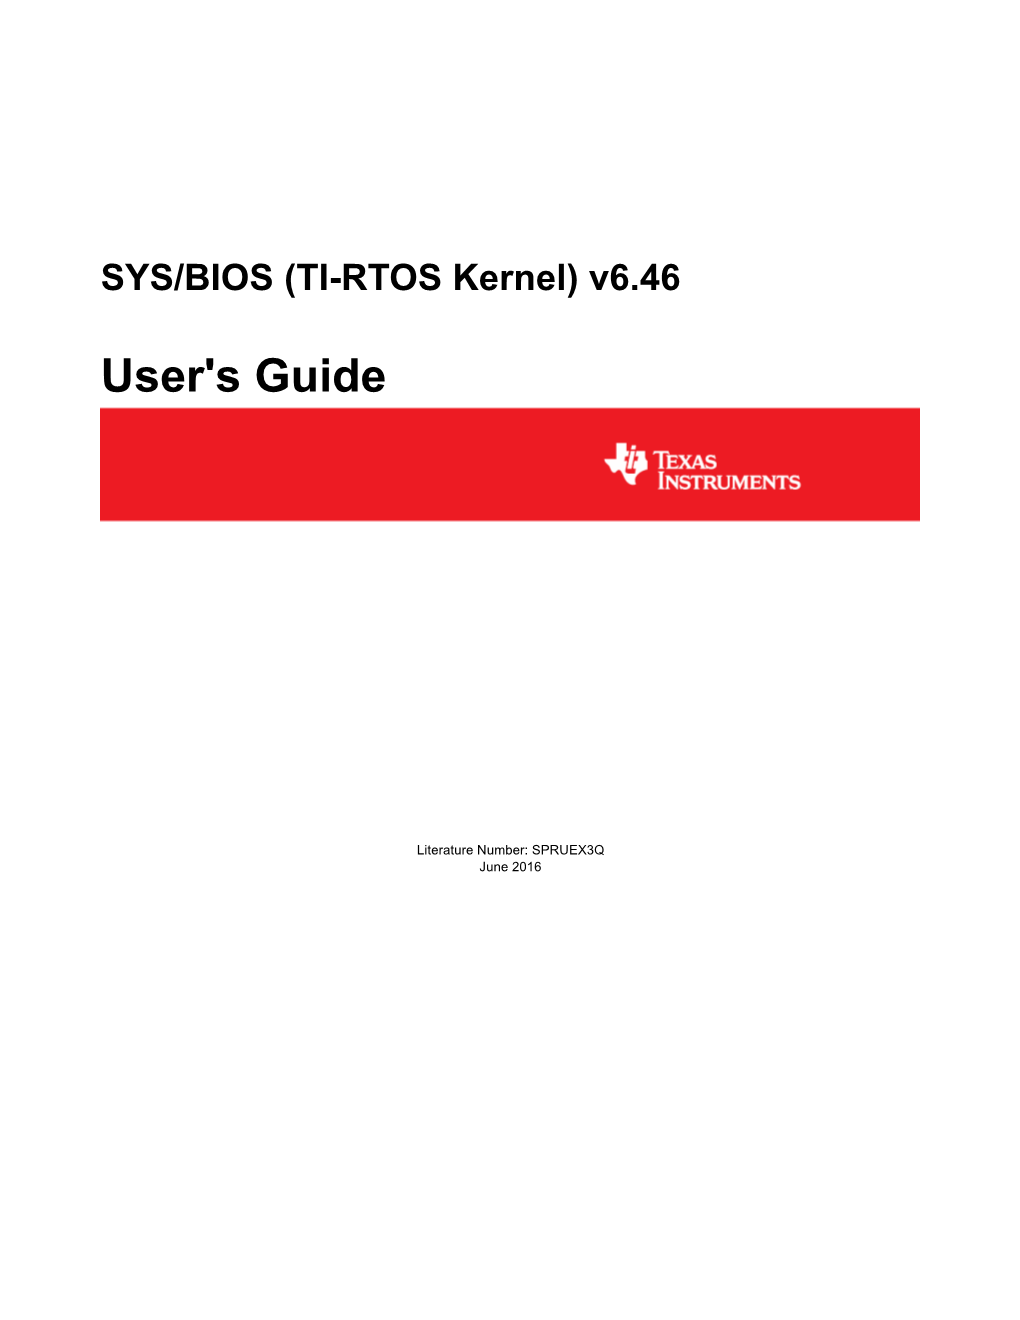 SYS/BIOS (TI-RTOS Kernel) V6.46 User's Guide